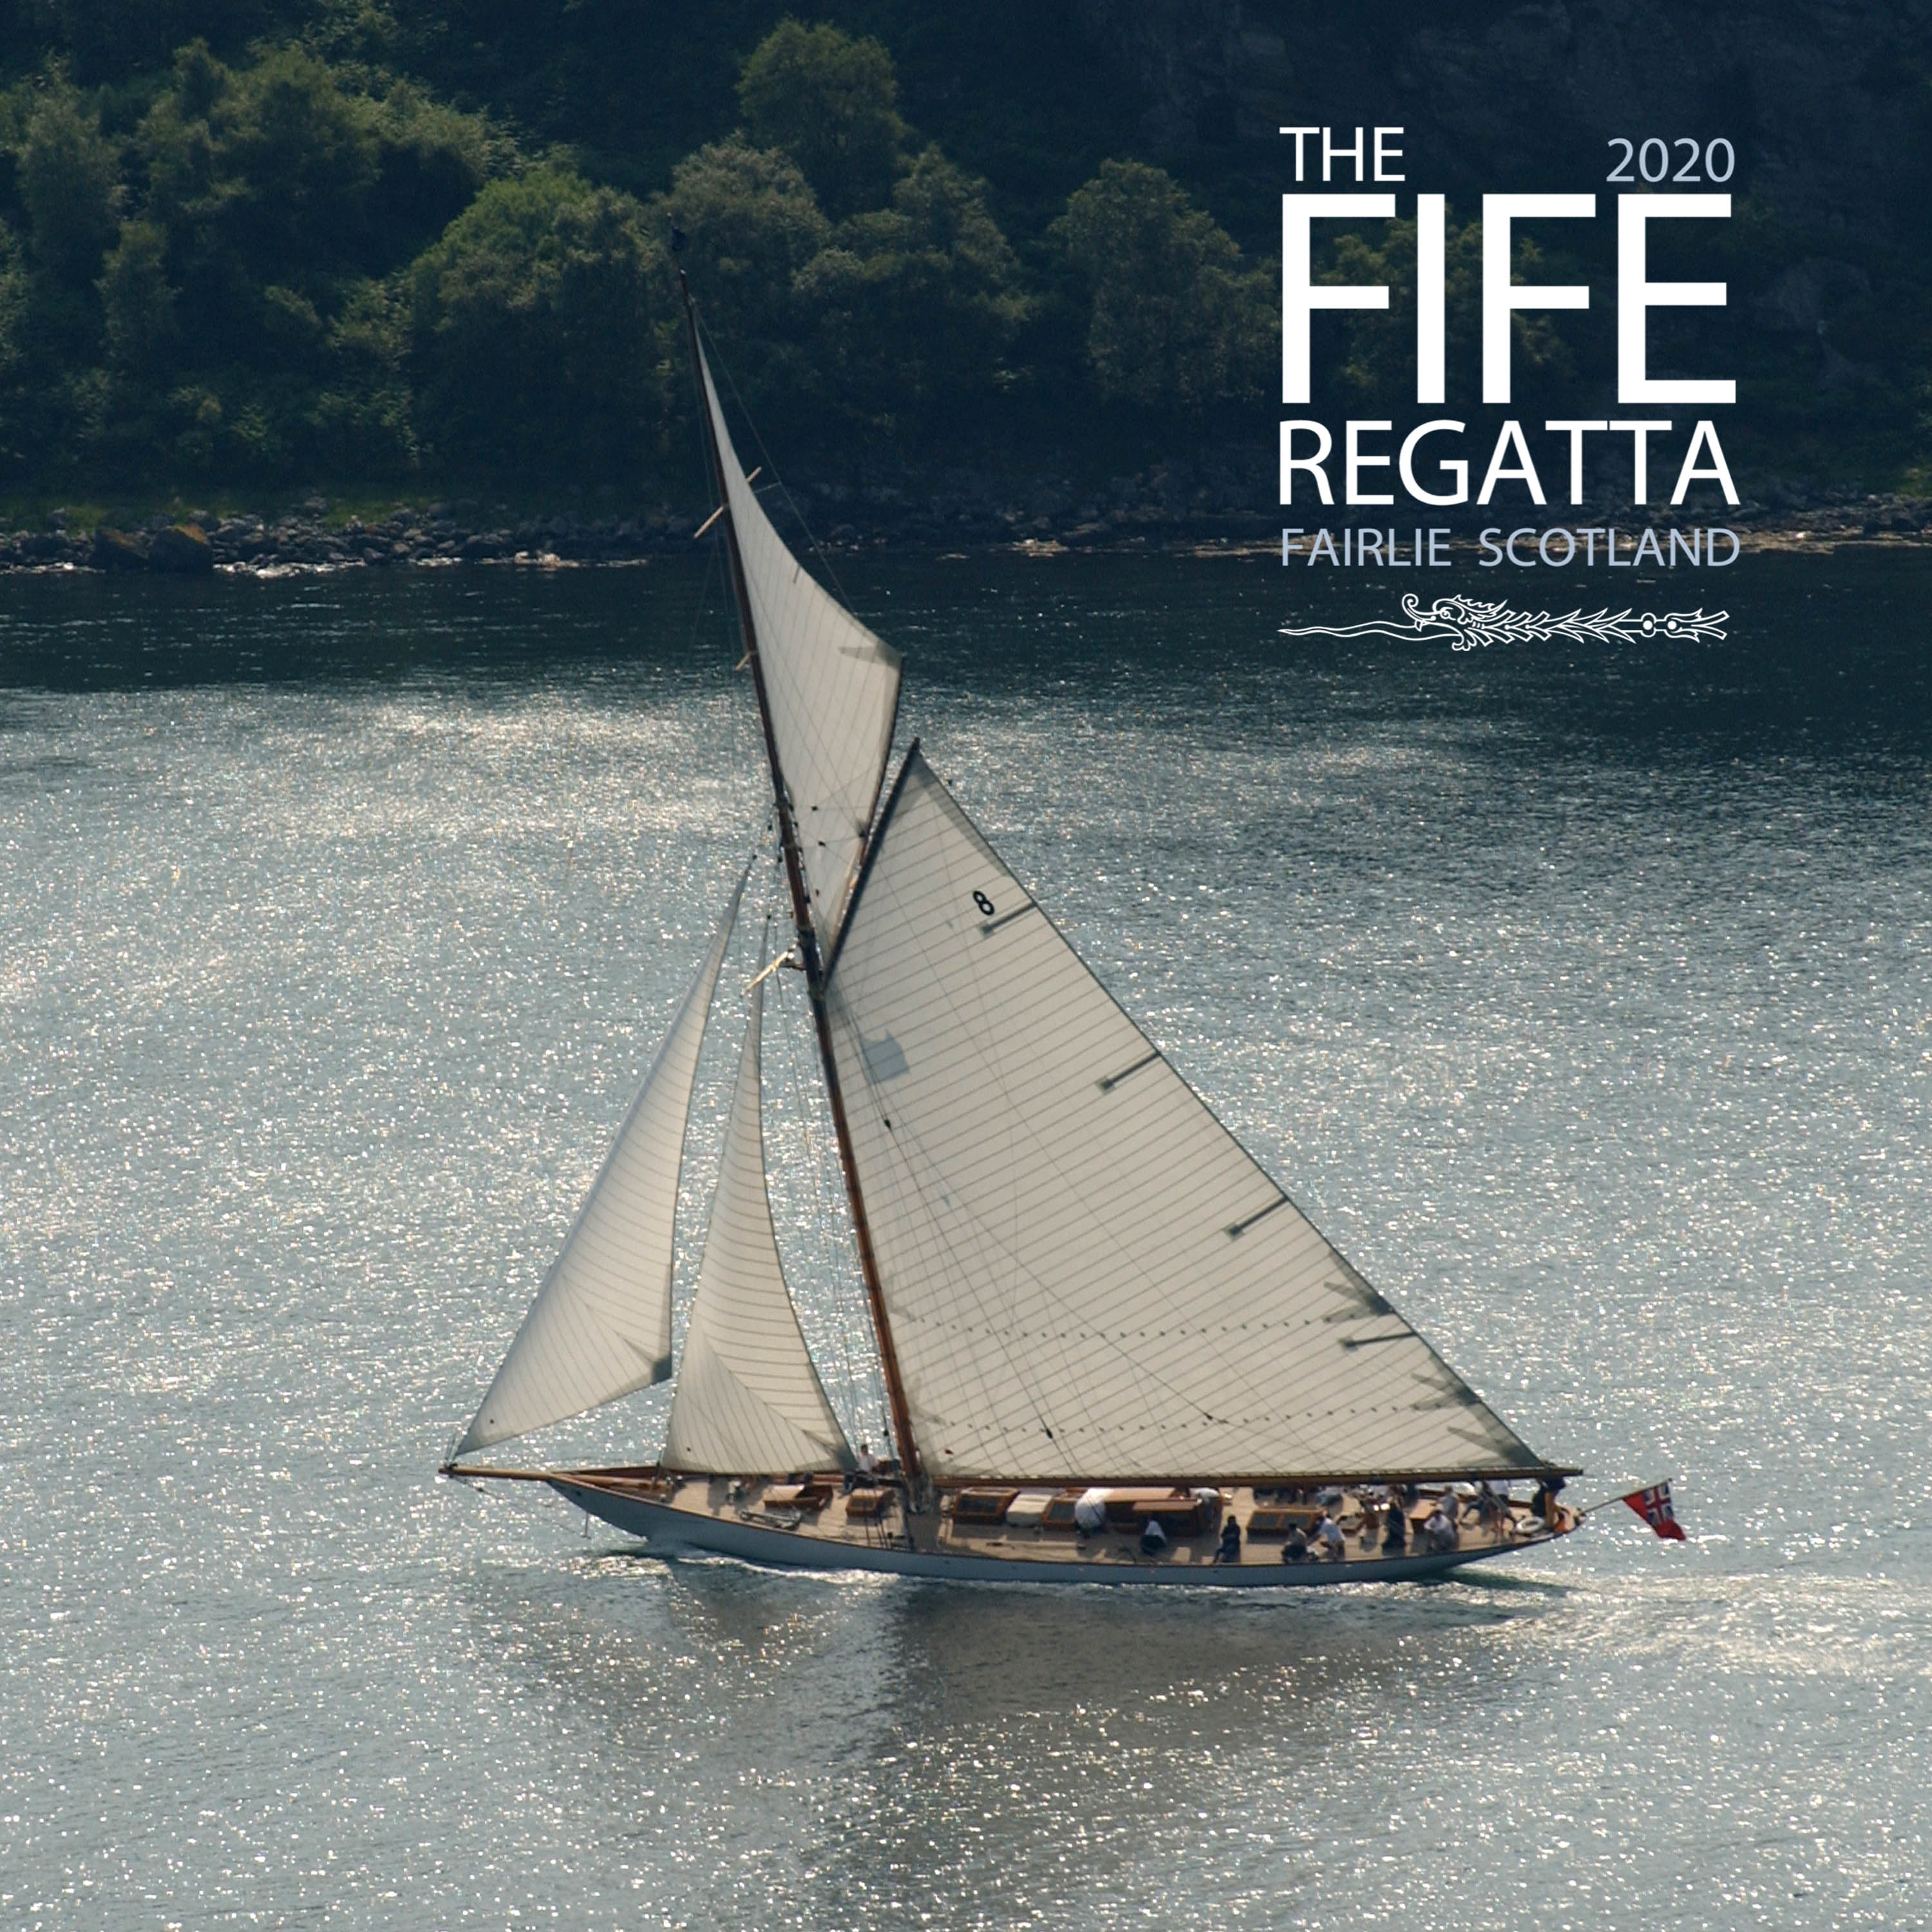 The Fife Regatta